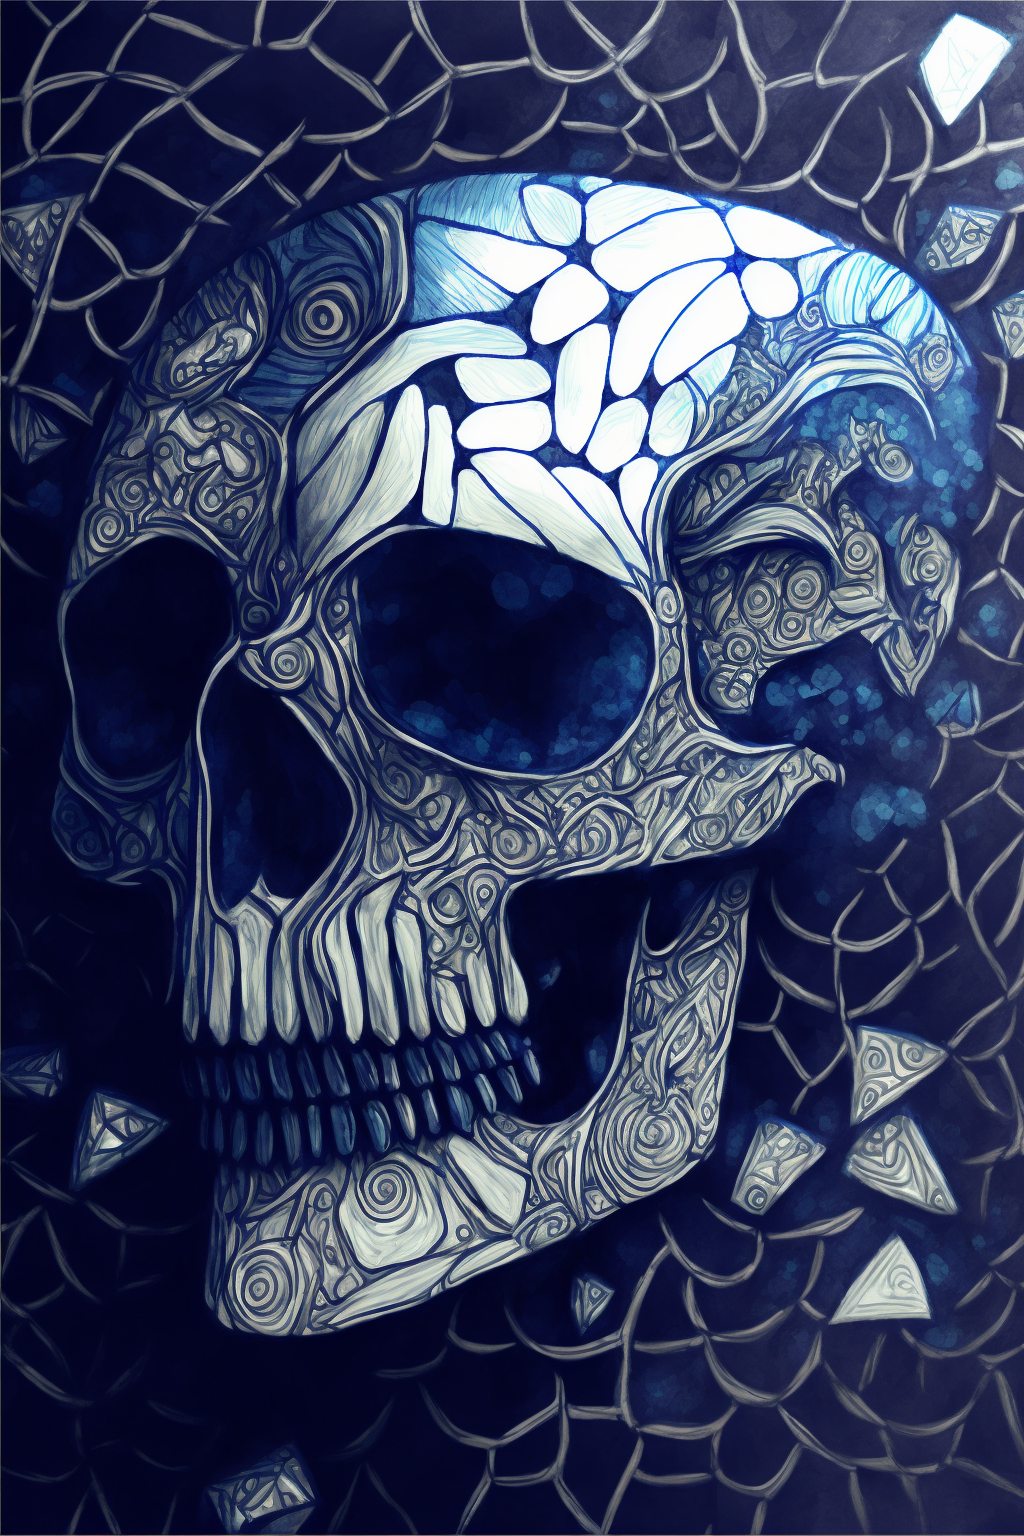 Skull in the style of Thaeyne 10